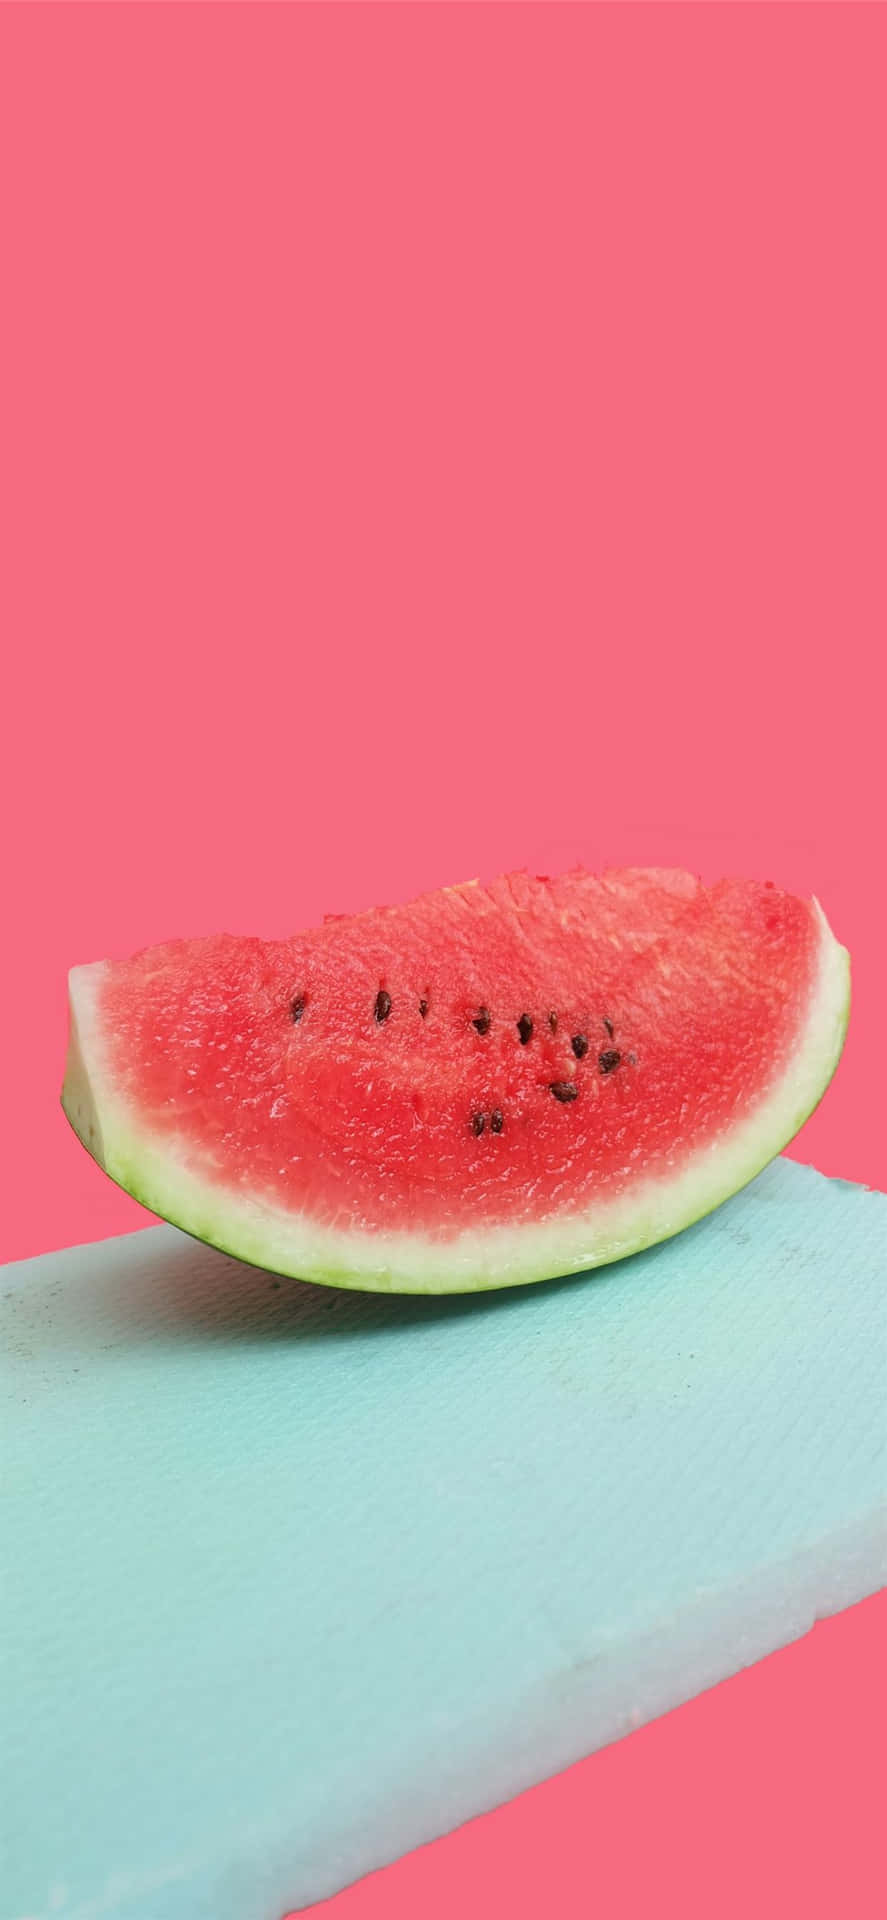 Delightfully Refreshing Watermelon iPhone Wallpaper Wallpaper